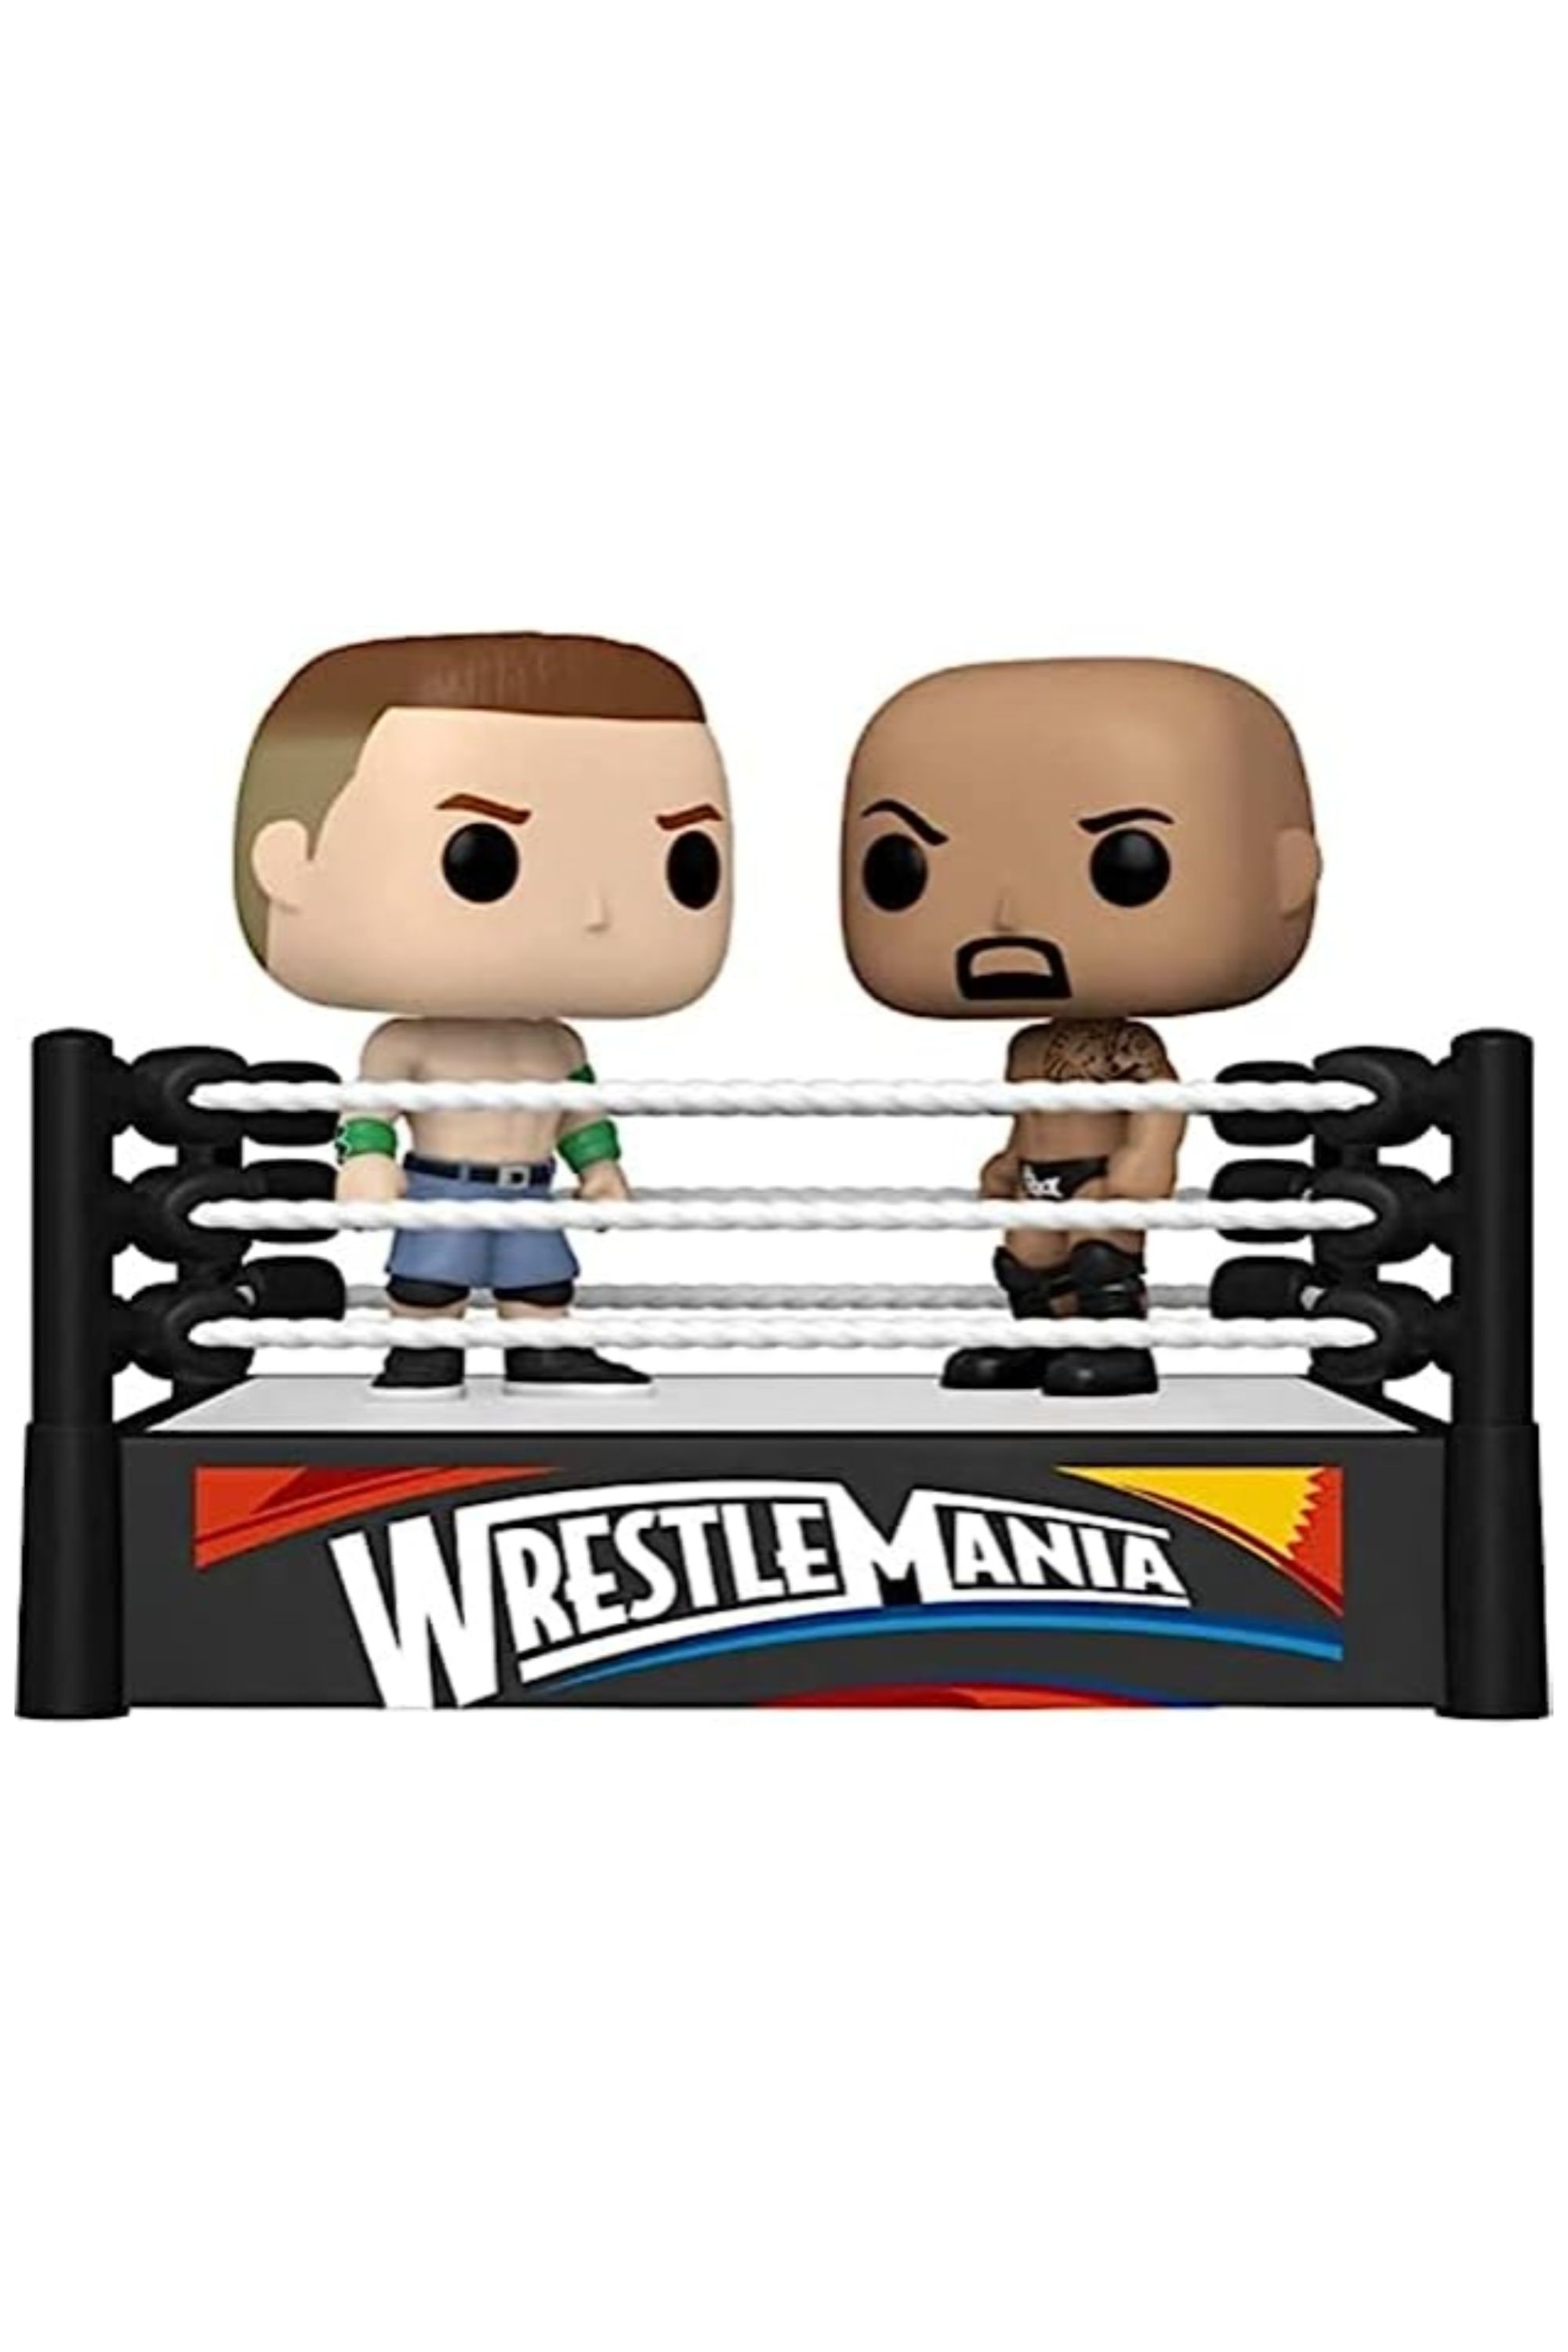 John Cena vs. The Rock bei Wrestlemania als Funko Pops